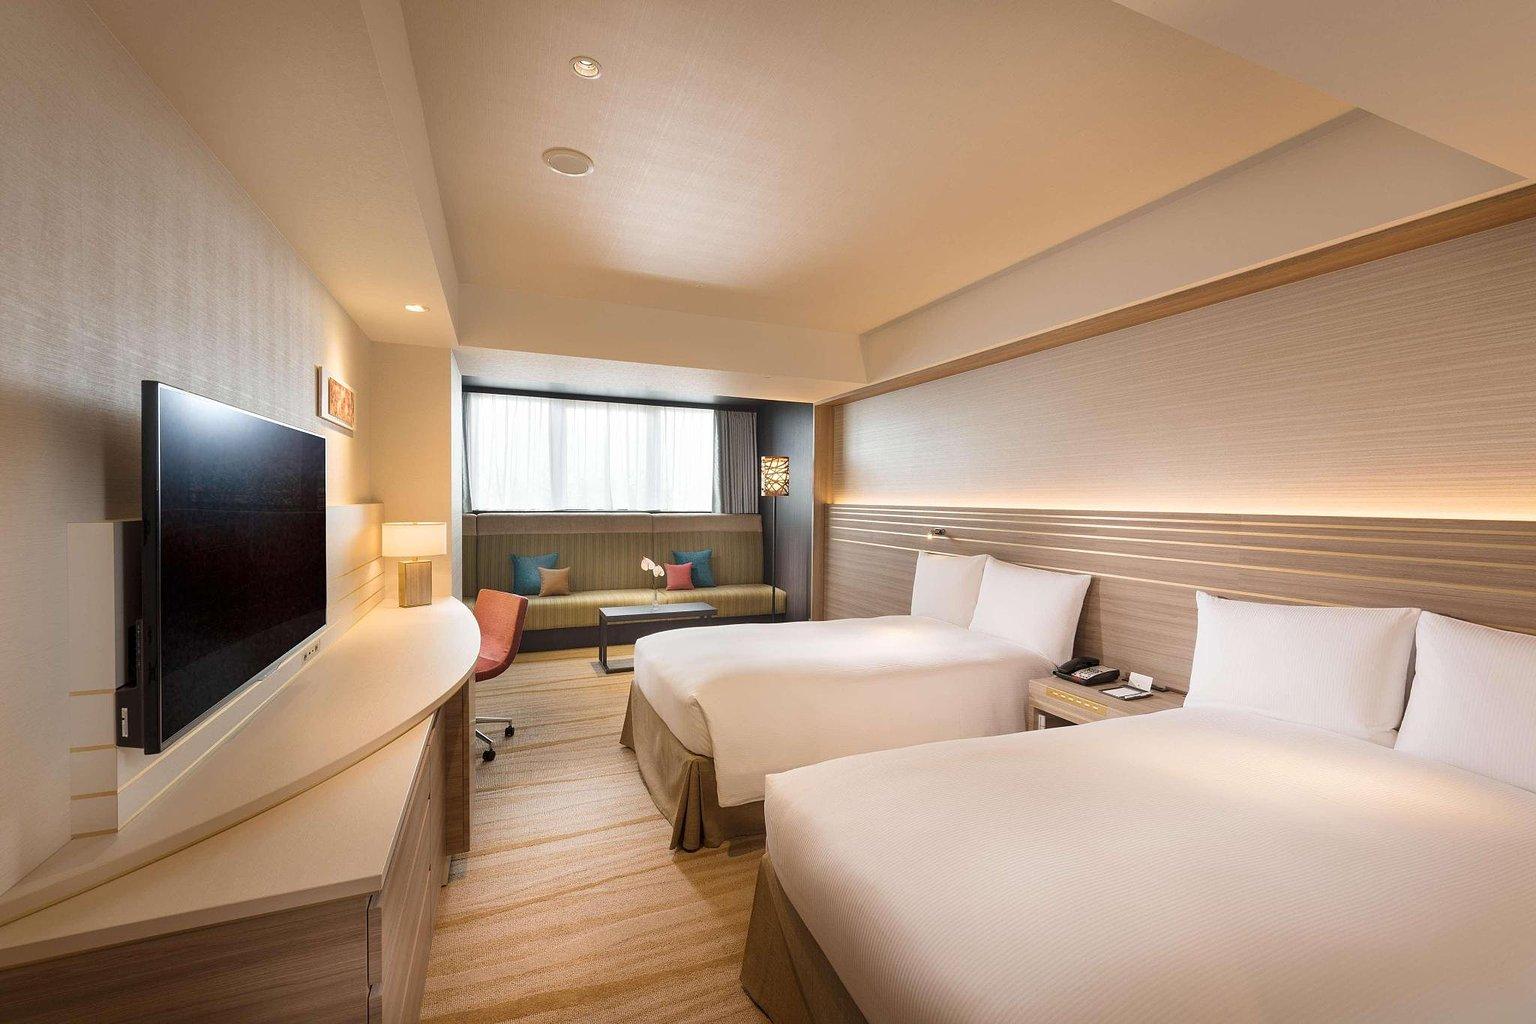 Twin Family Room - 沖繩北谷希爾頓逸林度假酒店  / DoubleTree by Hilton Okinawa Chatan Resort